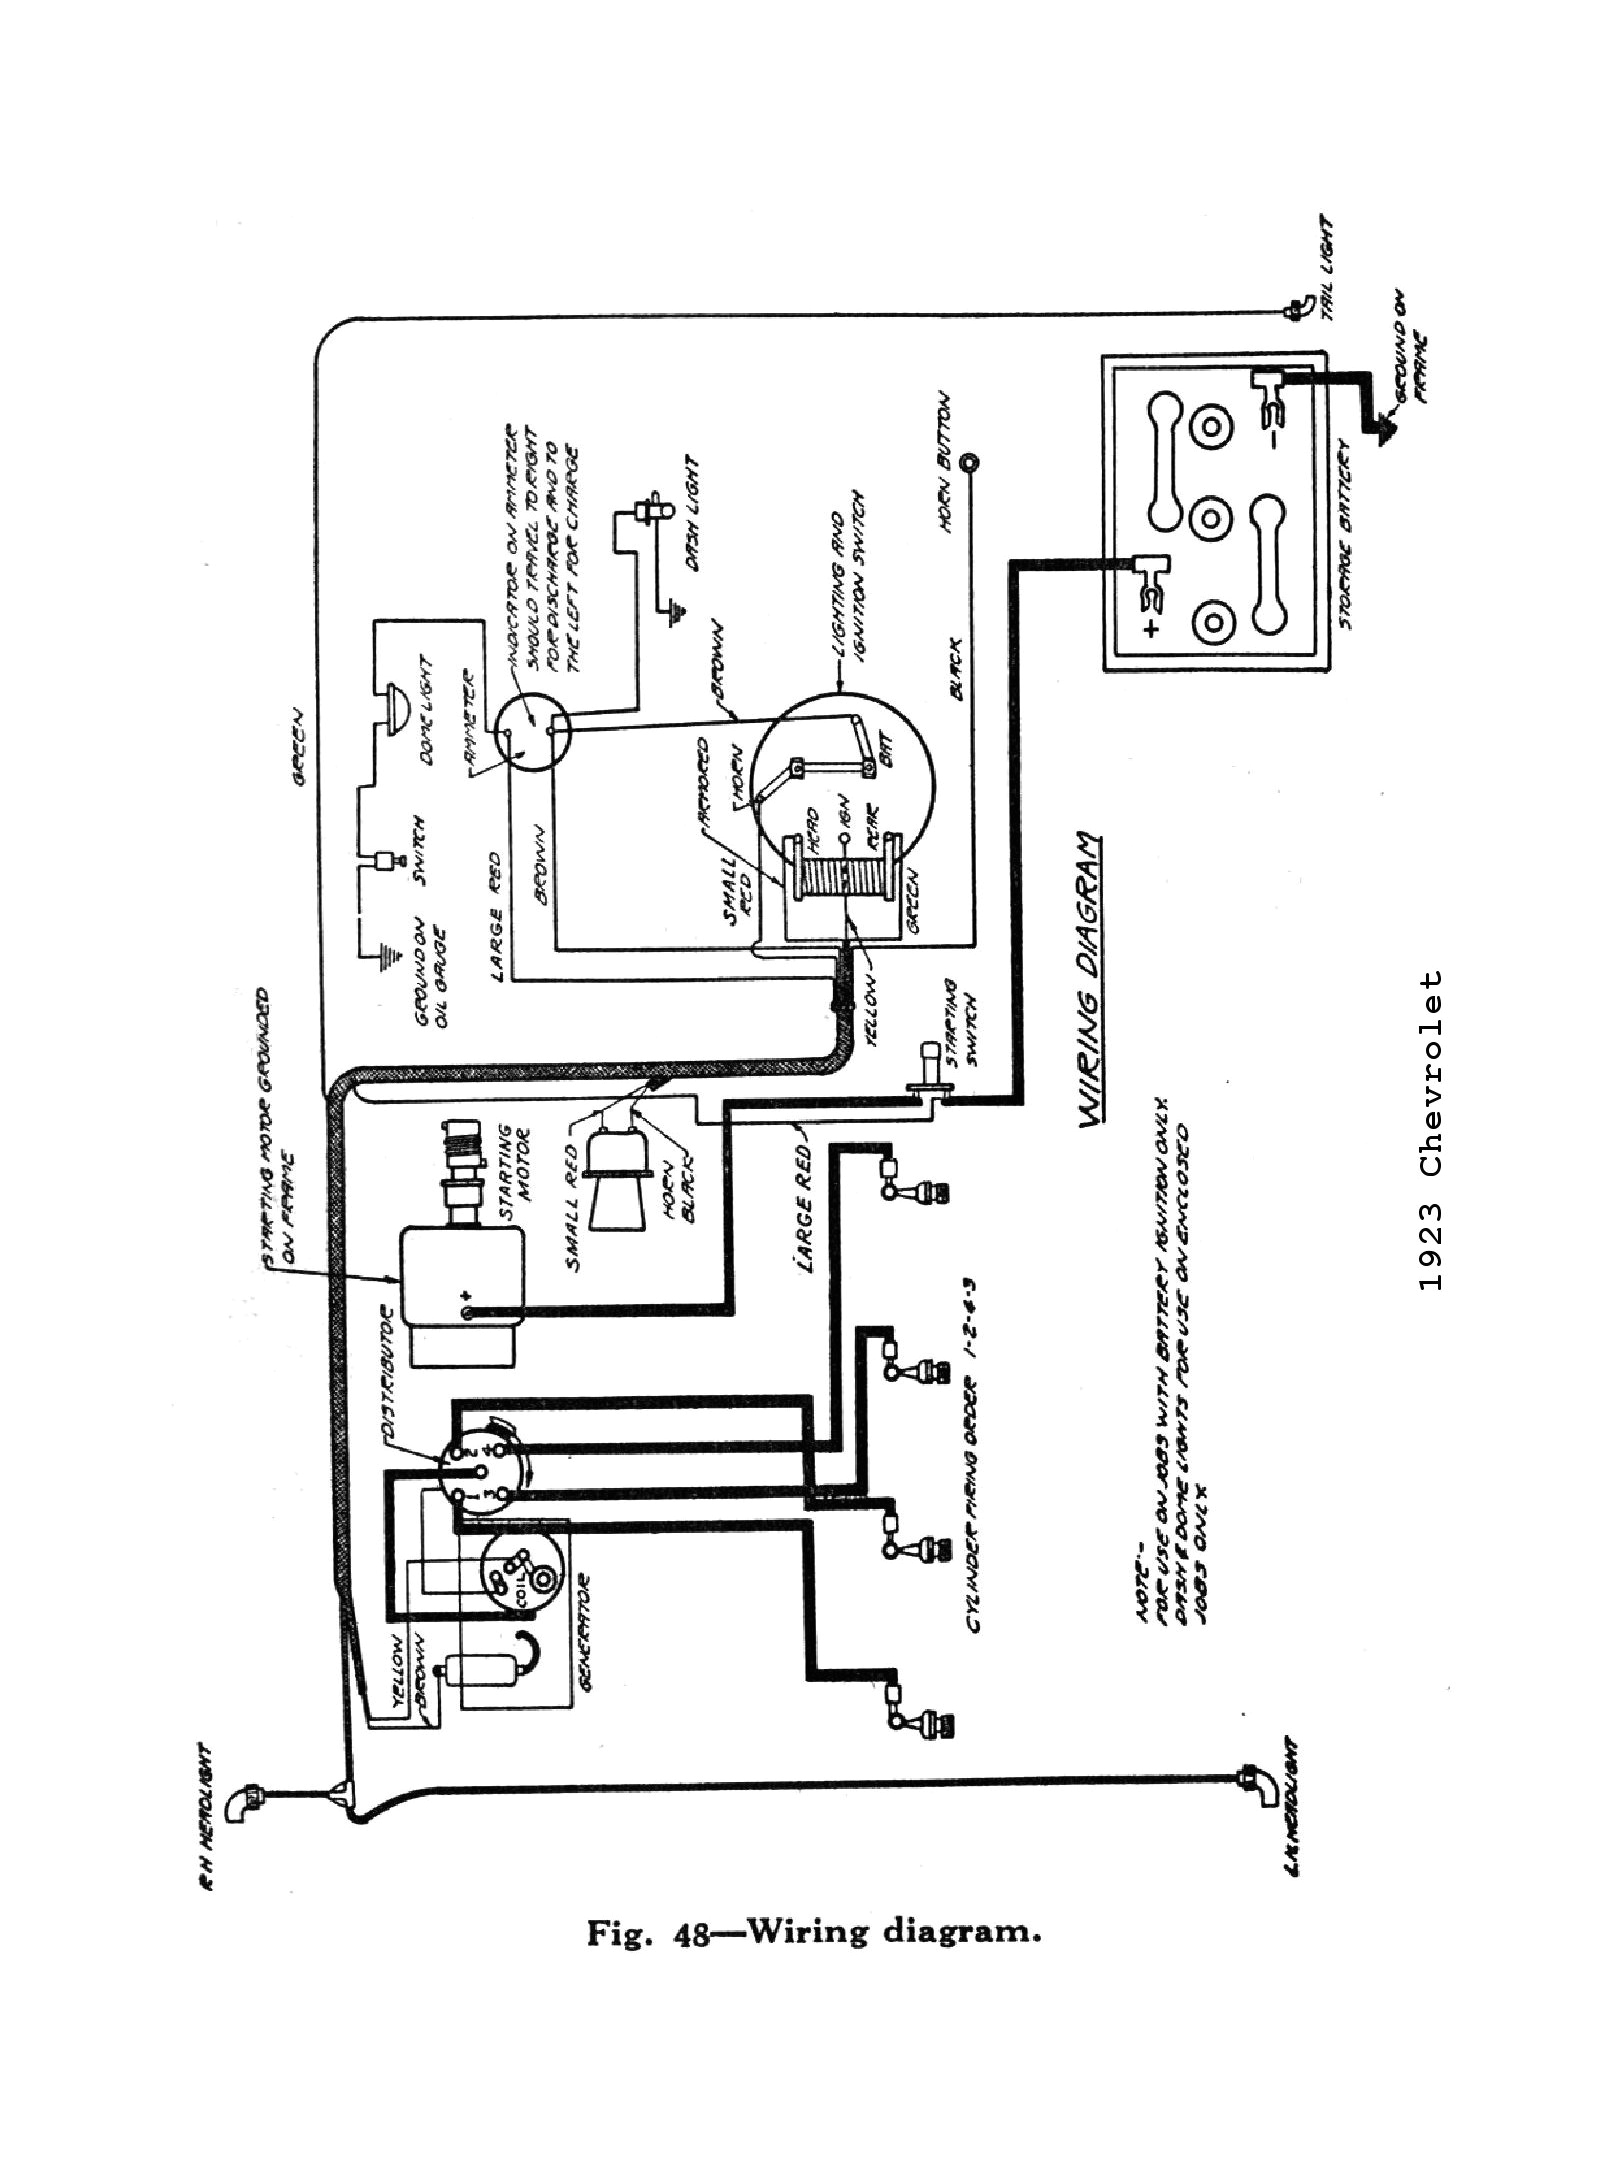 1960 gm wiper switch wiring diagram wiring diagram chevy wiring diagrams1960 gm wiper switch wiring diagram